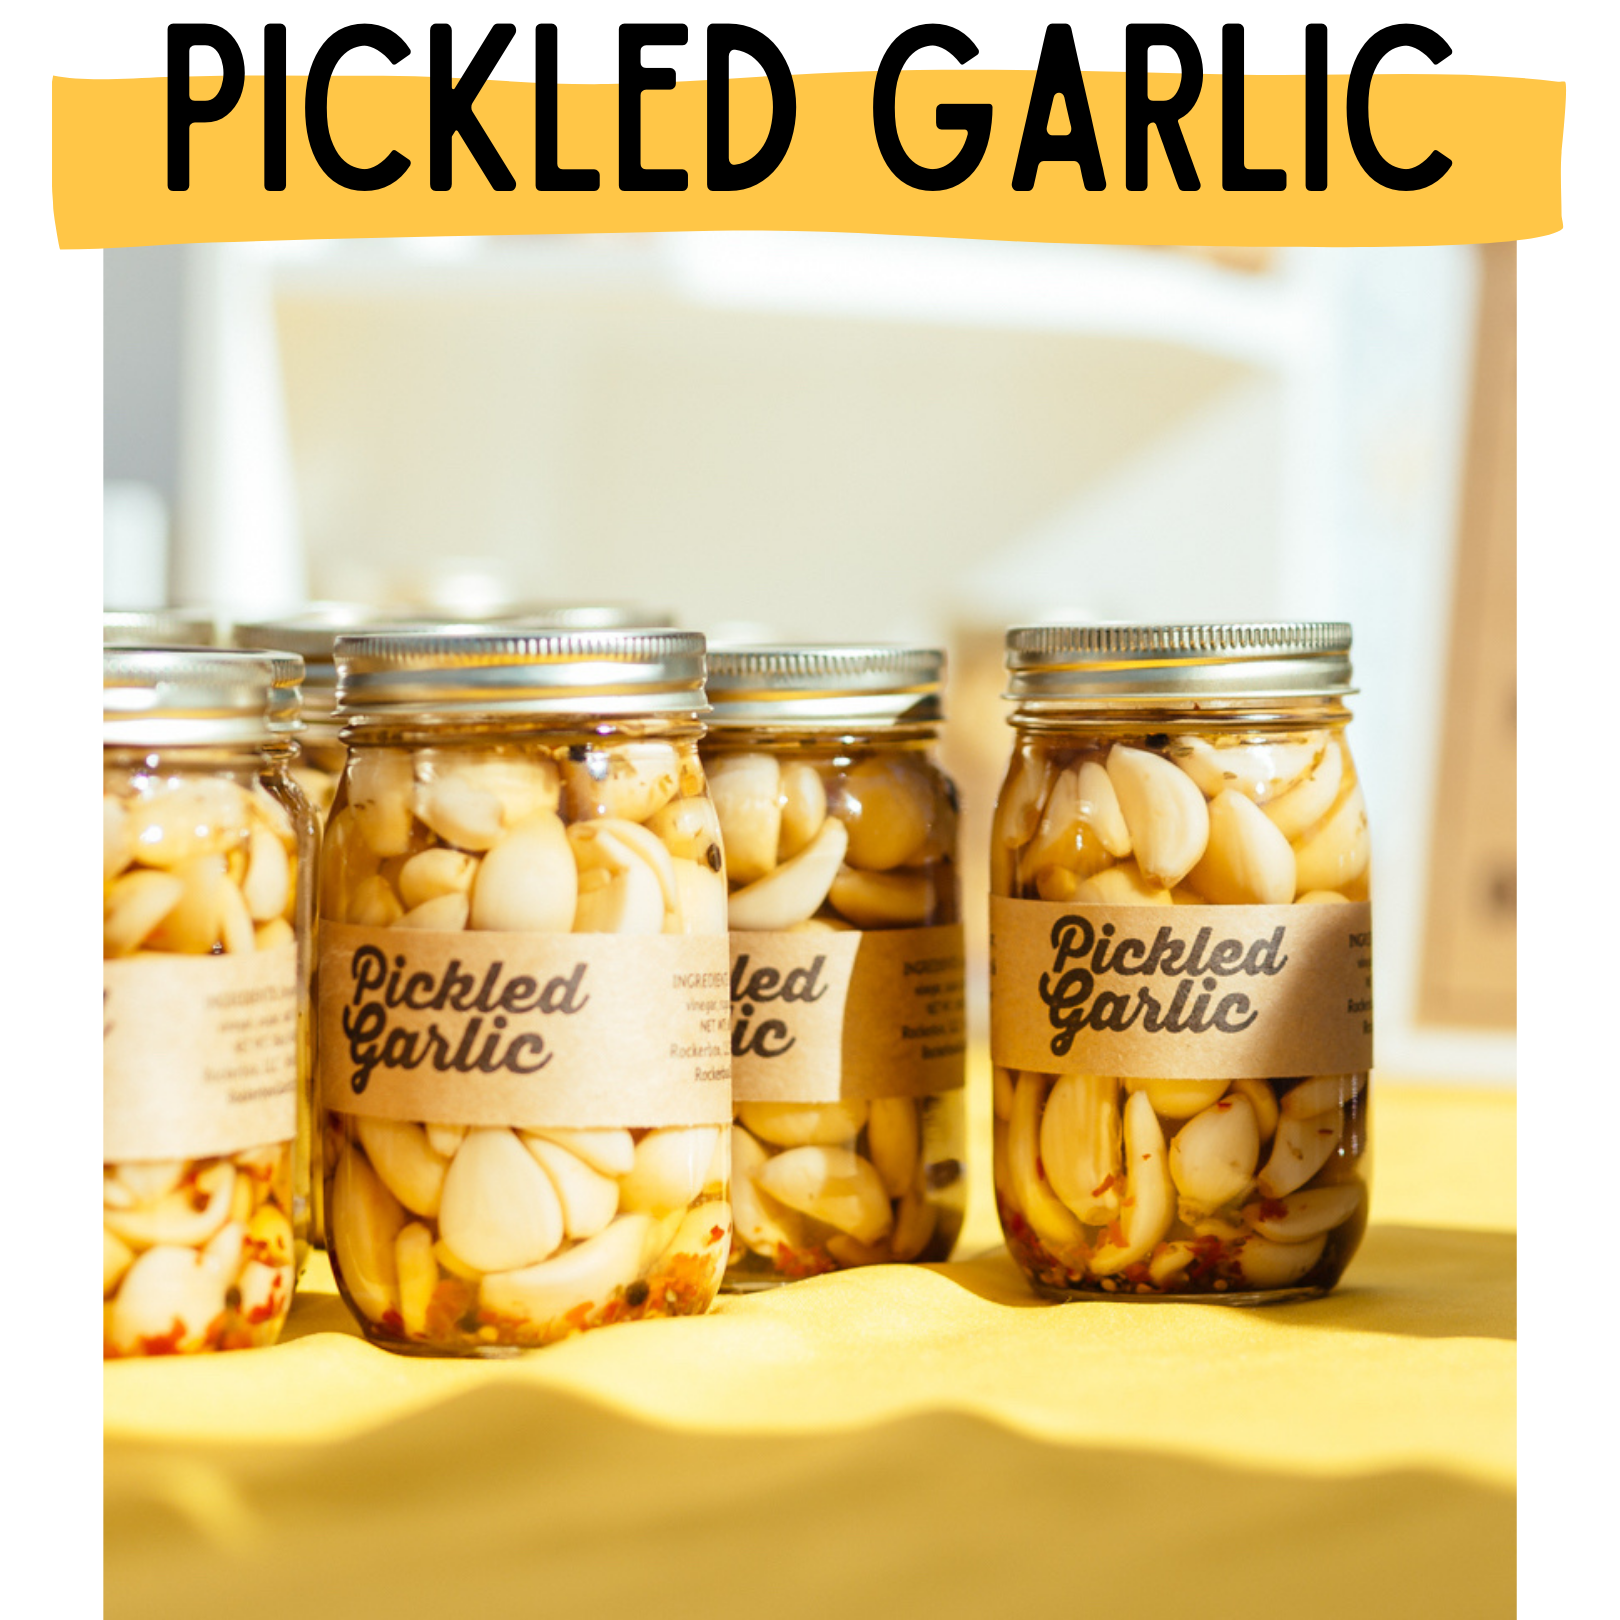 Handmade pickled garlic